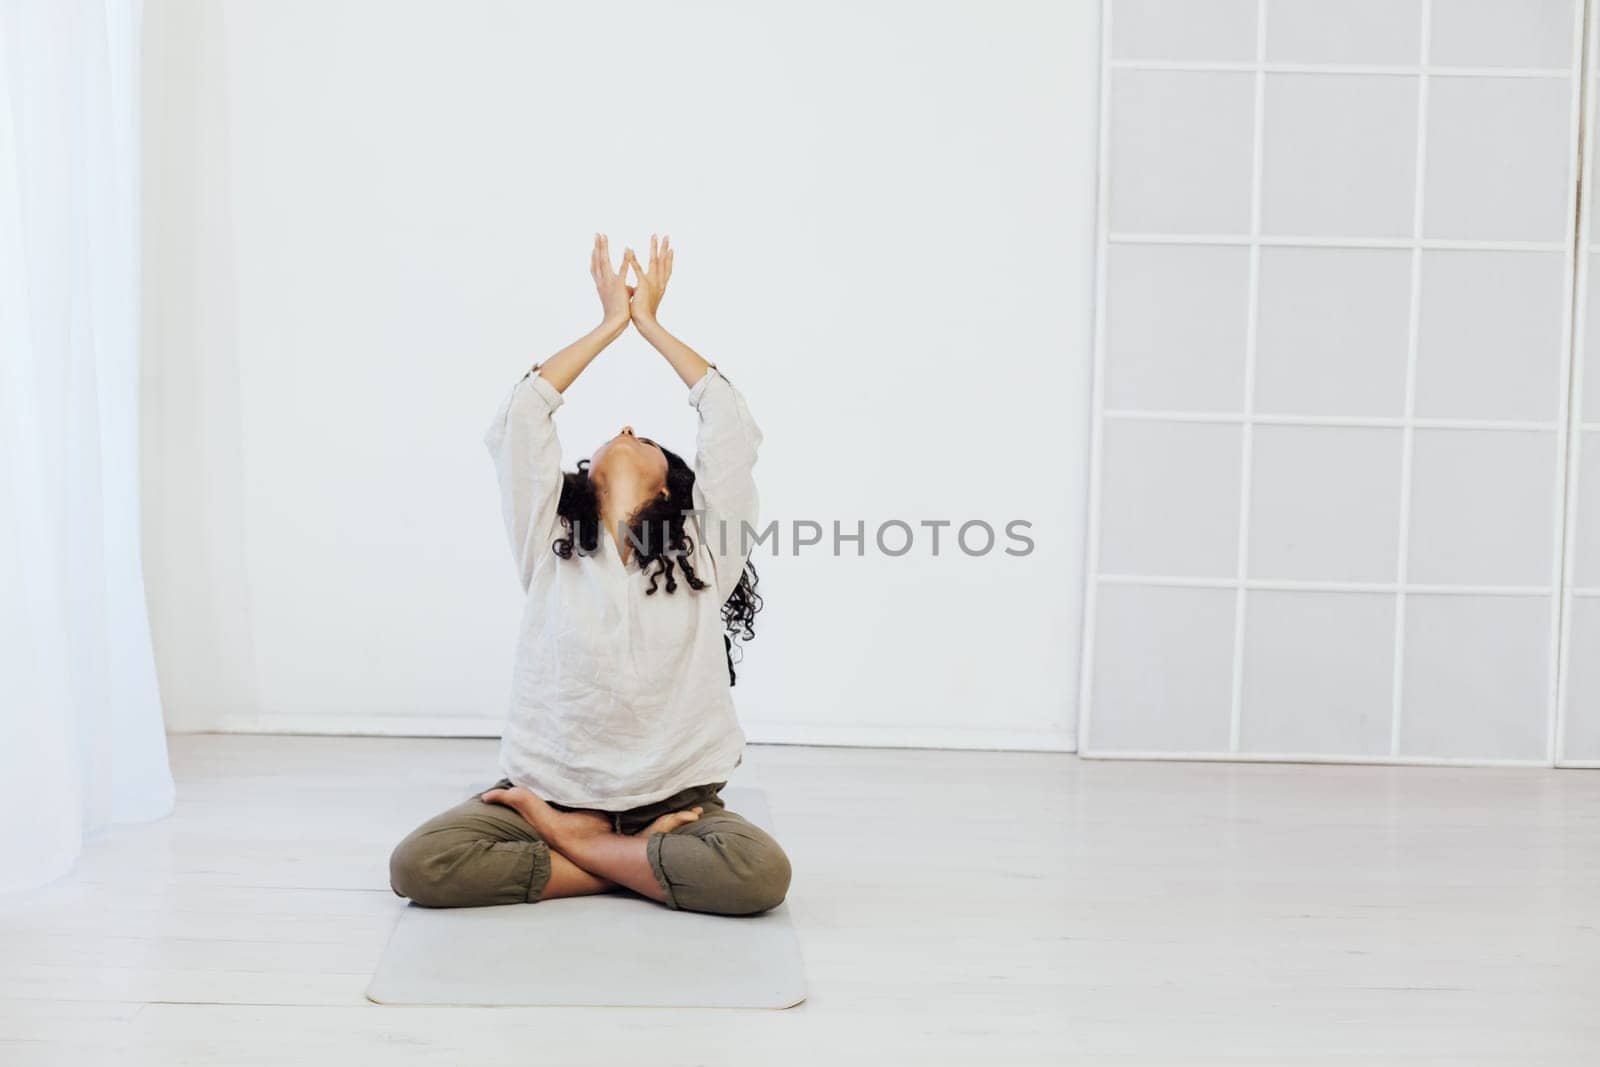 woman yoga asana gymnastics body flexibility